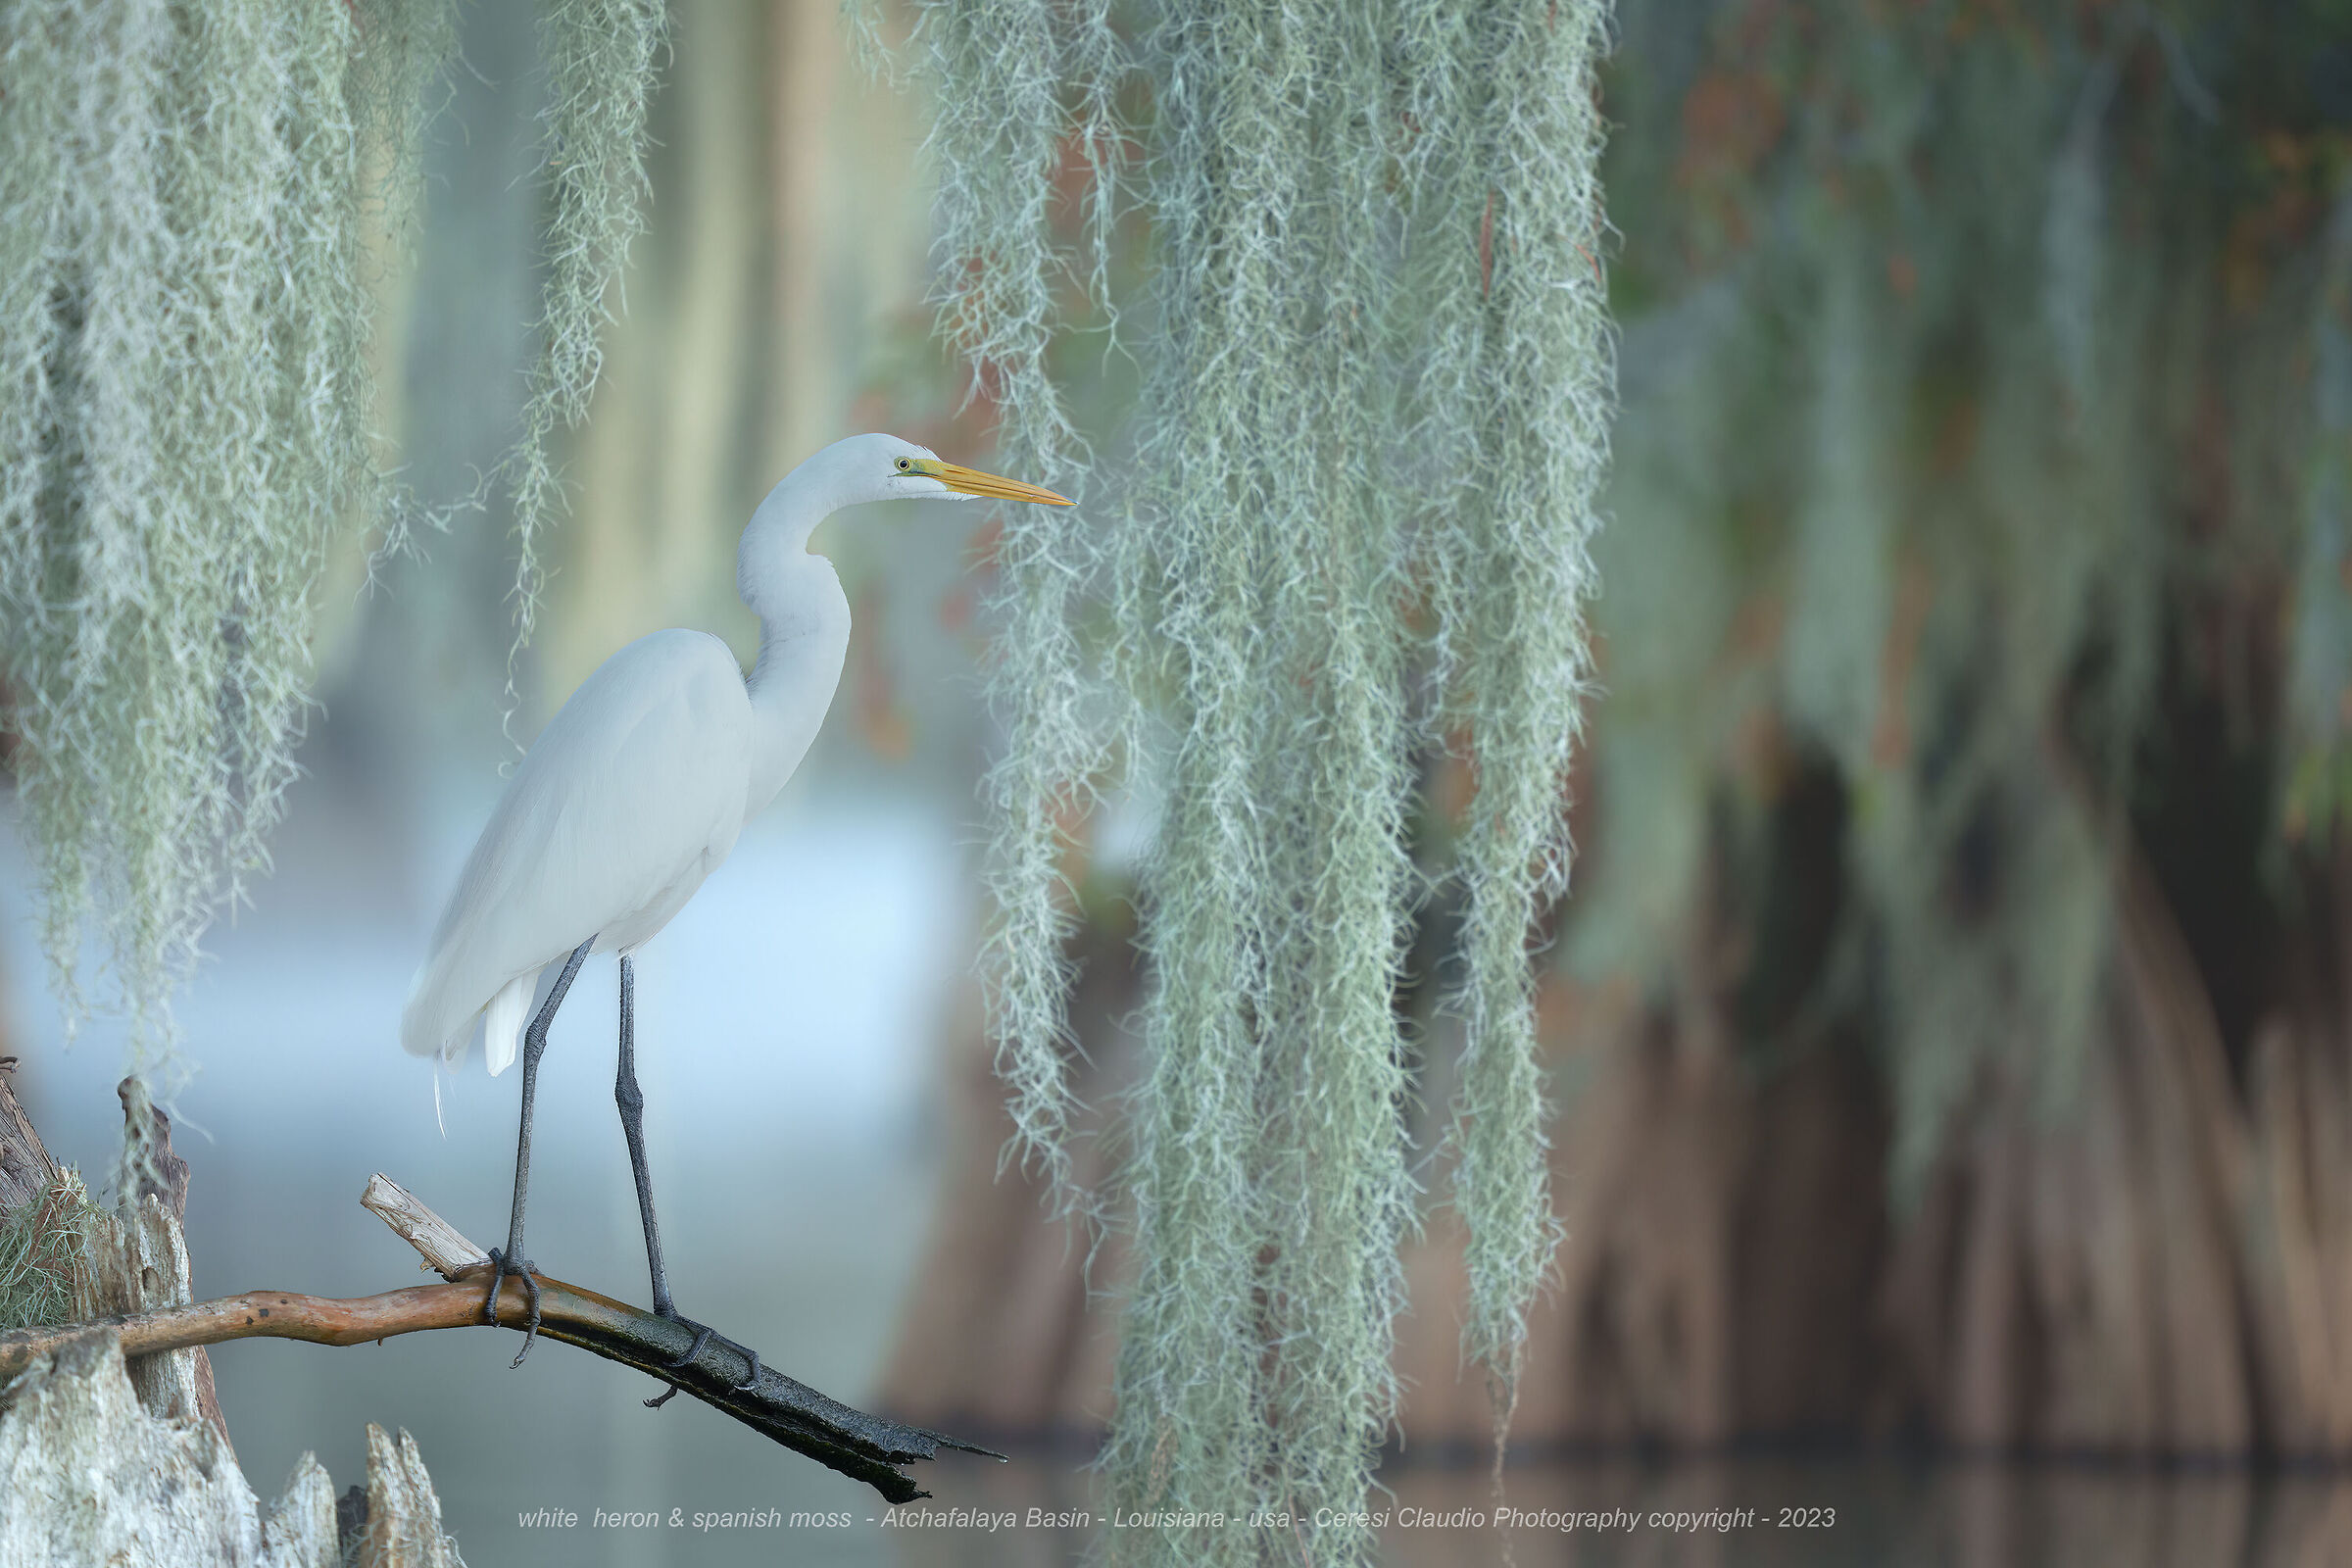 white heron & spanish moss - Atchafalaya Basin ...